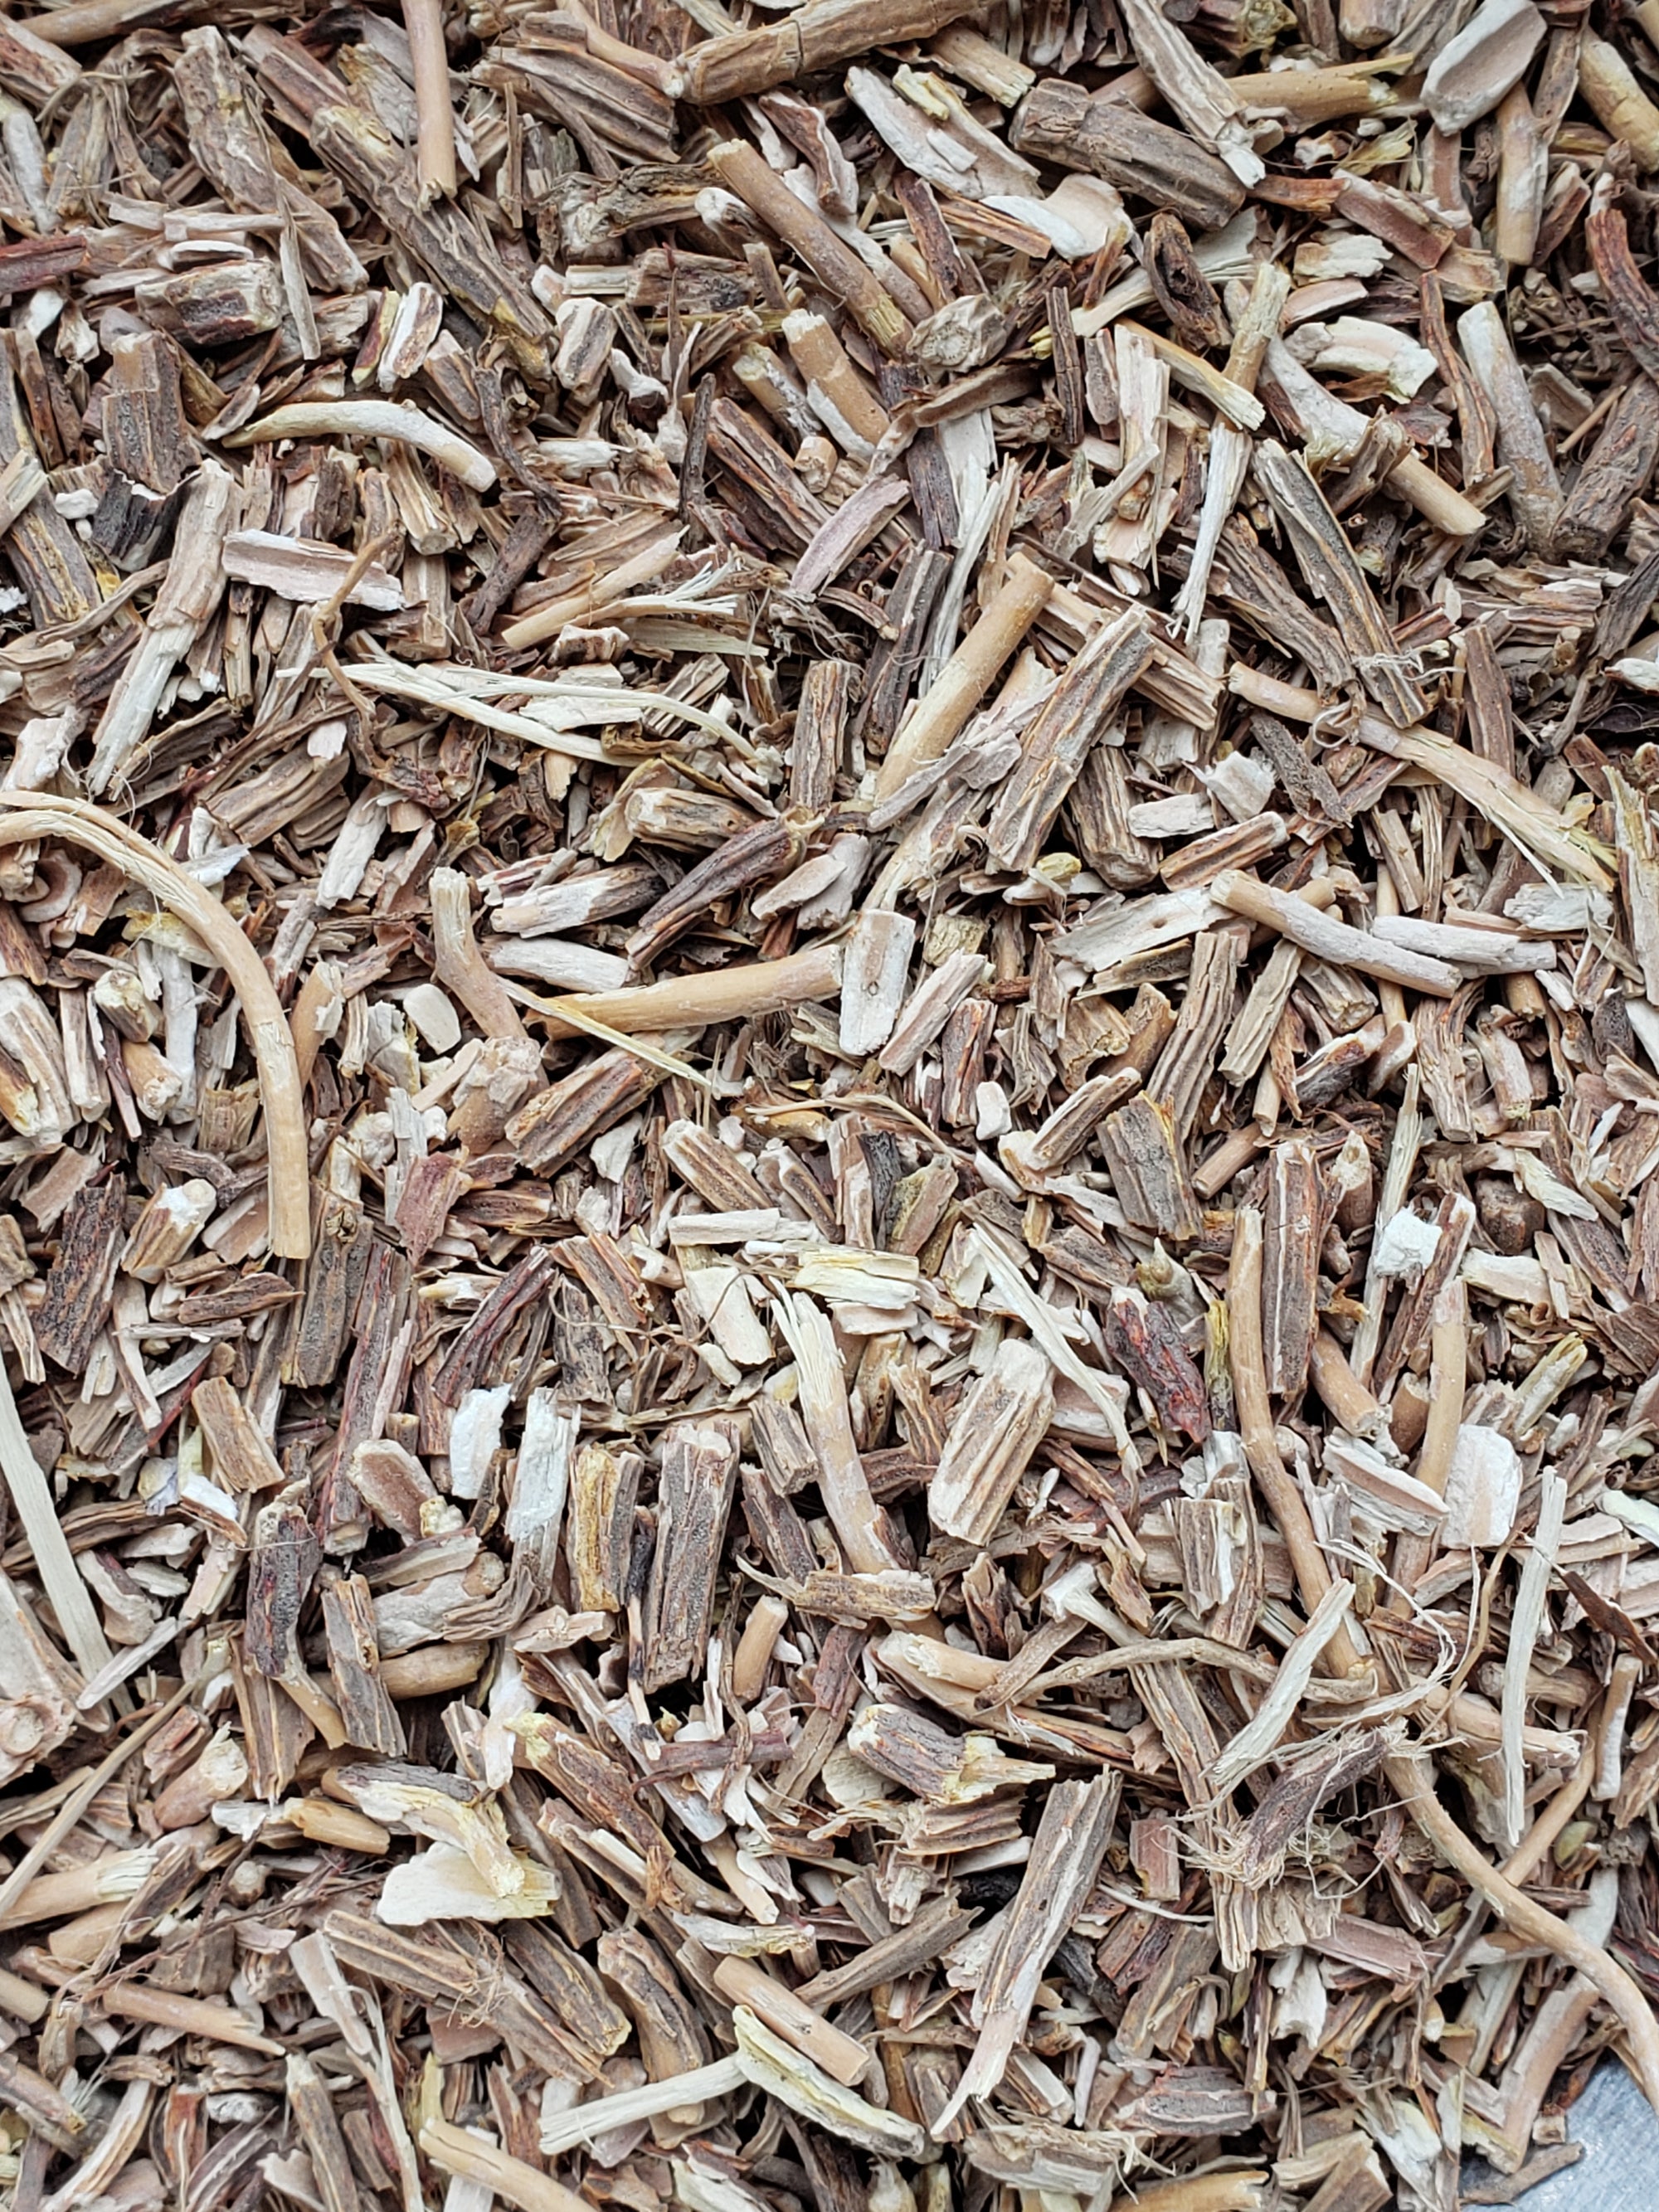 Jamaican Sarsaparilla Root (Wildcrafted) – bulkyfoodsja